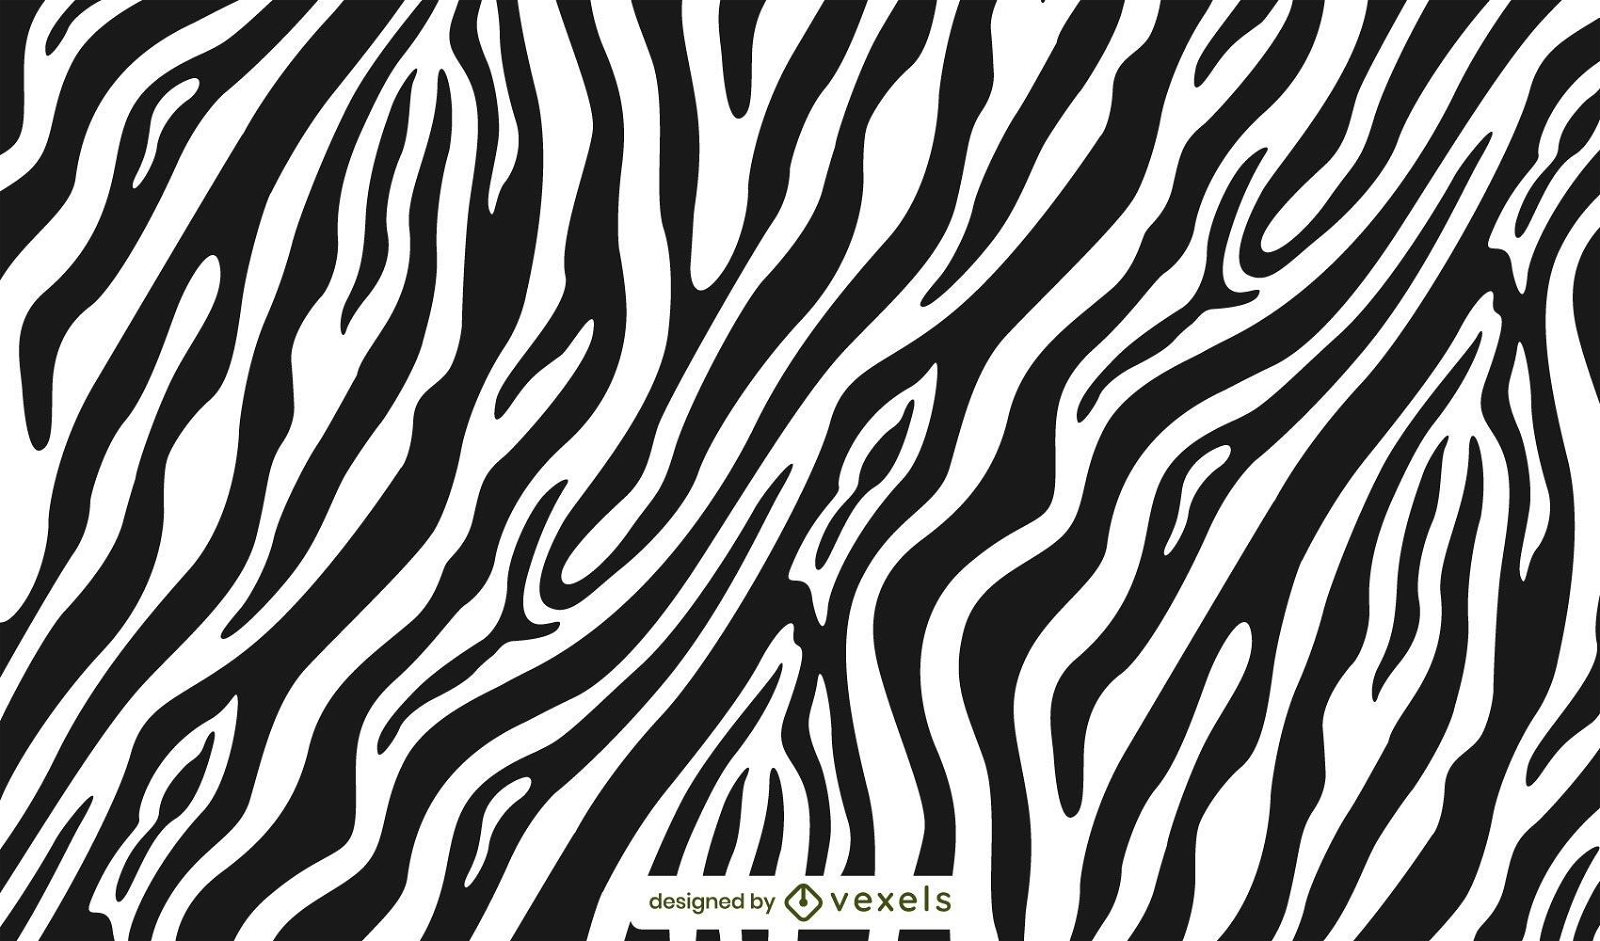 Zebra print pattern design